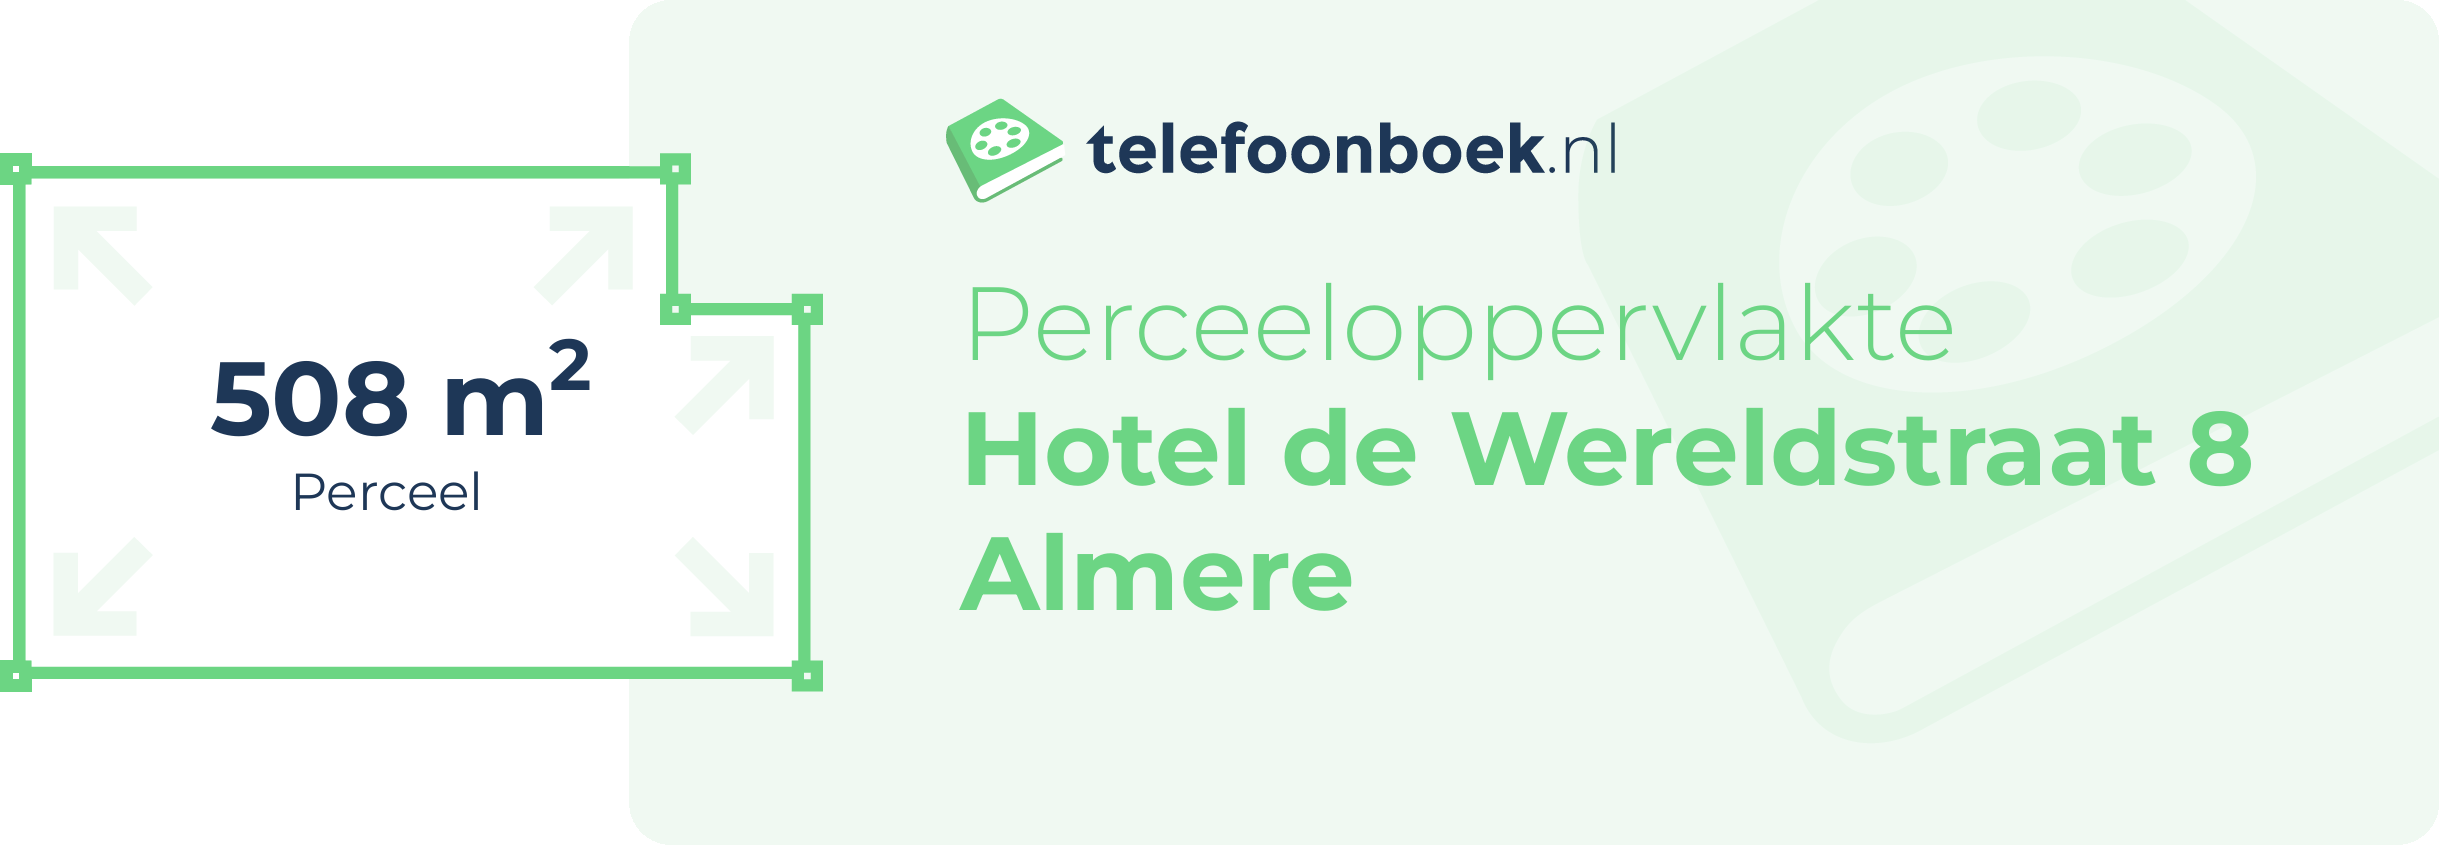 Perceeloppervlakte Hotel De Wereldstraat 8 Almere